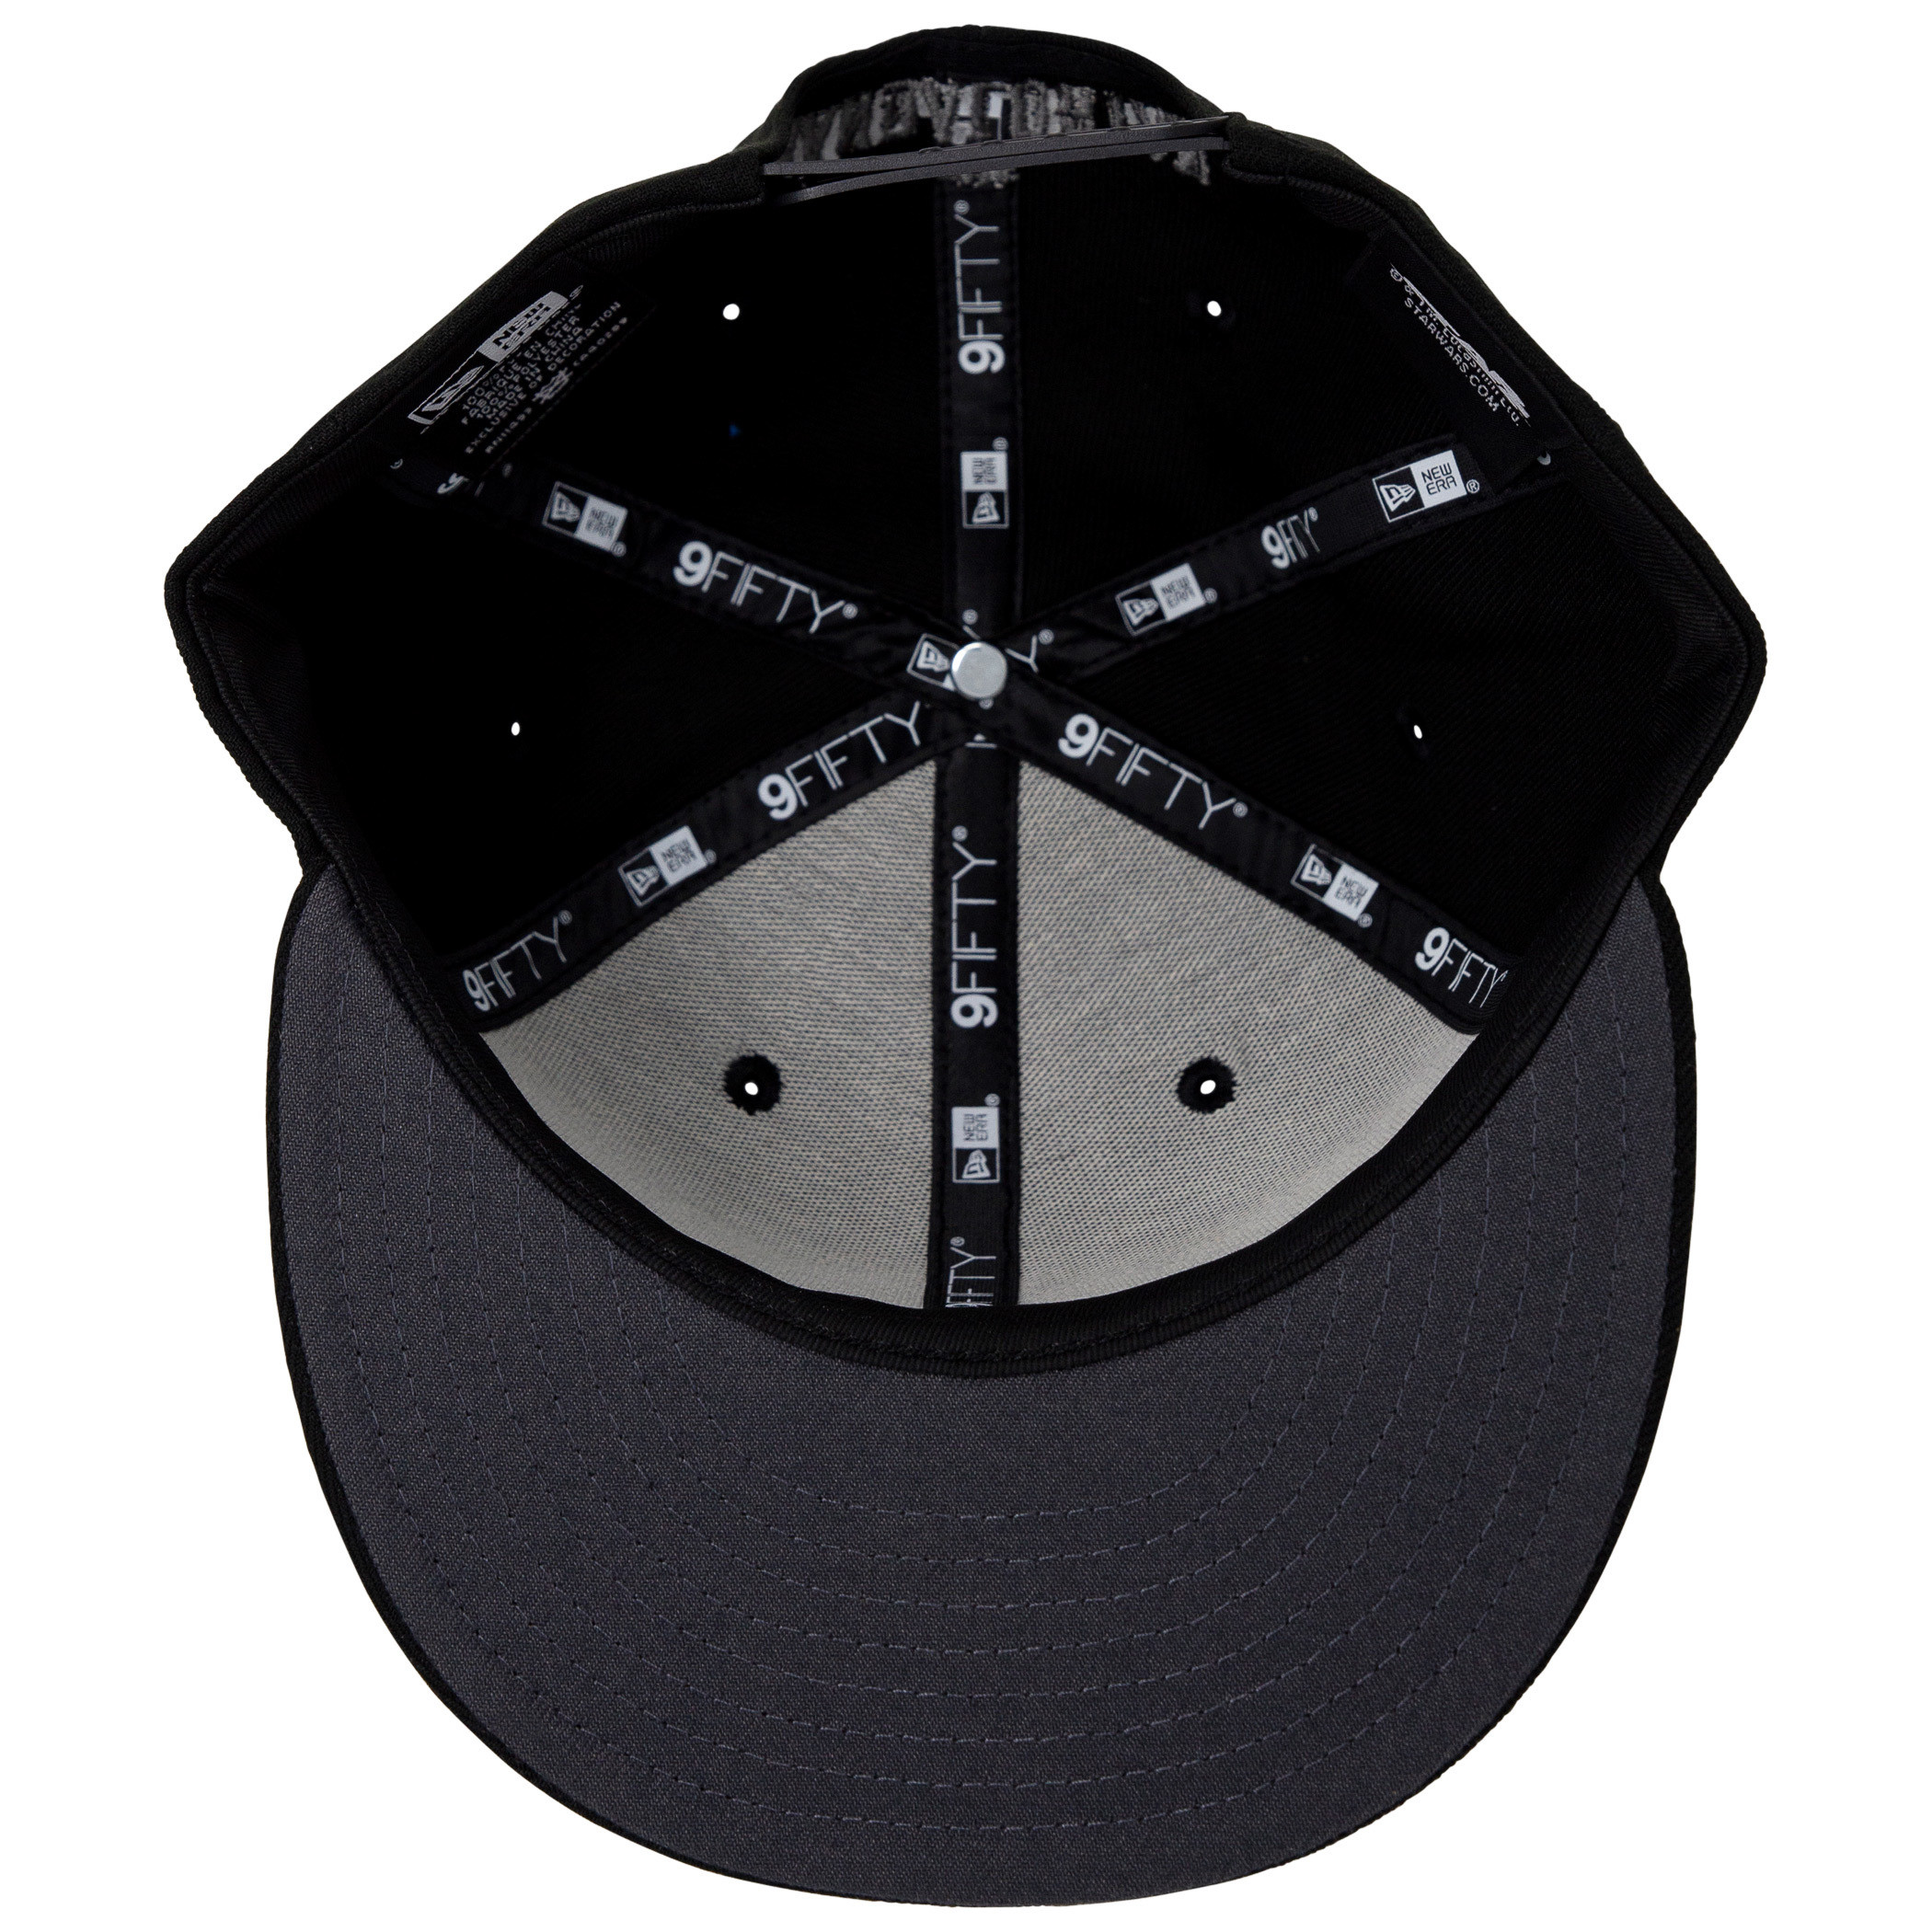 Star Wars The Mandalorian New Era 9Fifty Adjustable Hat